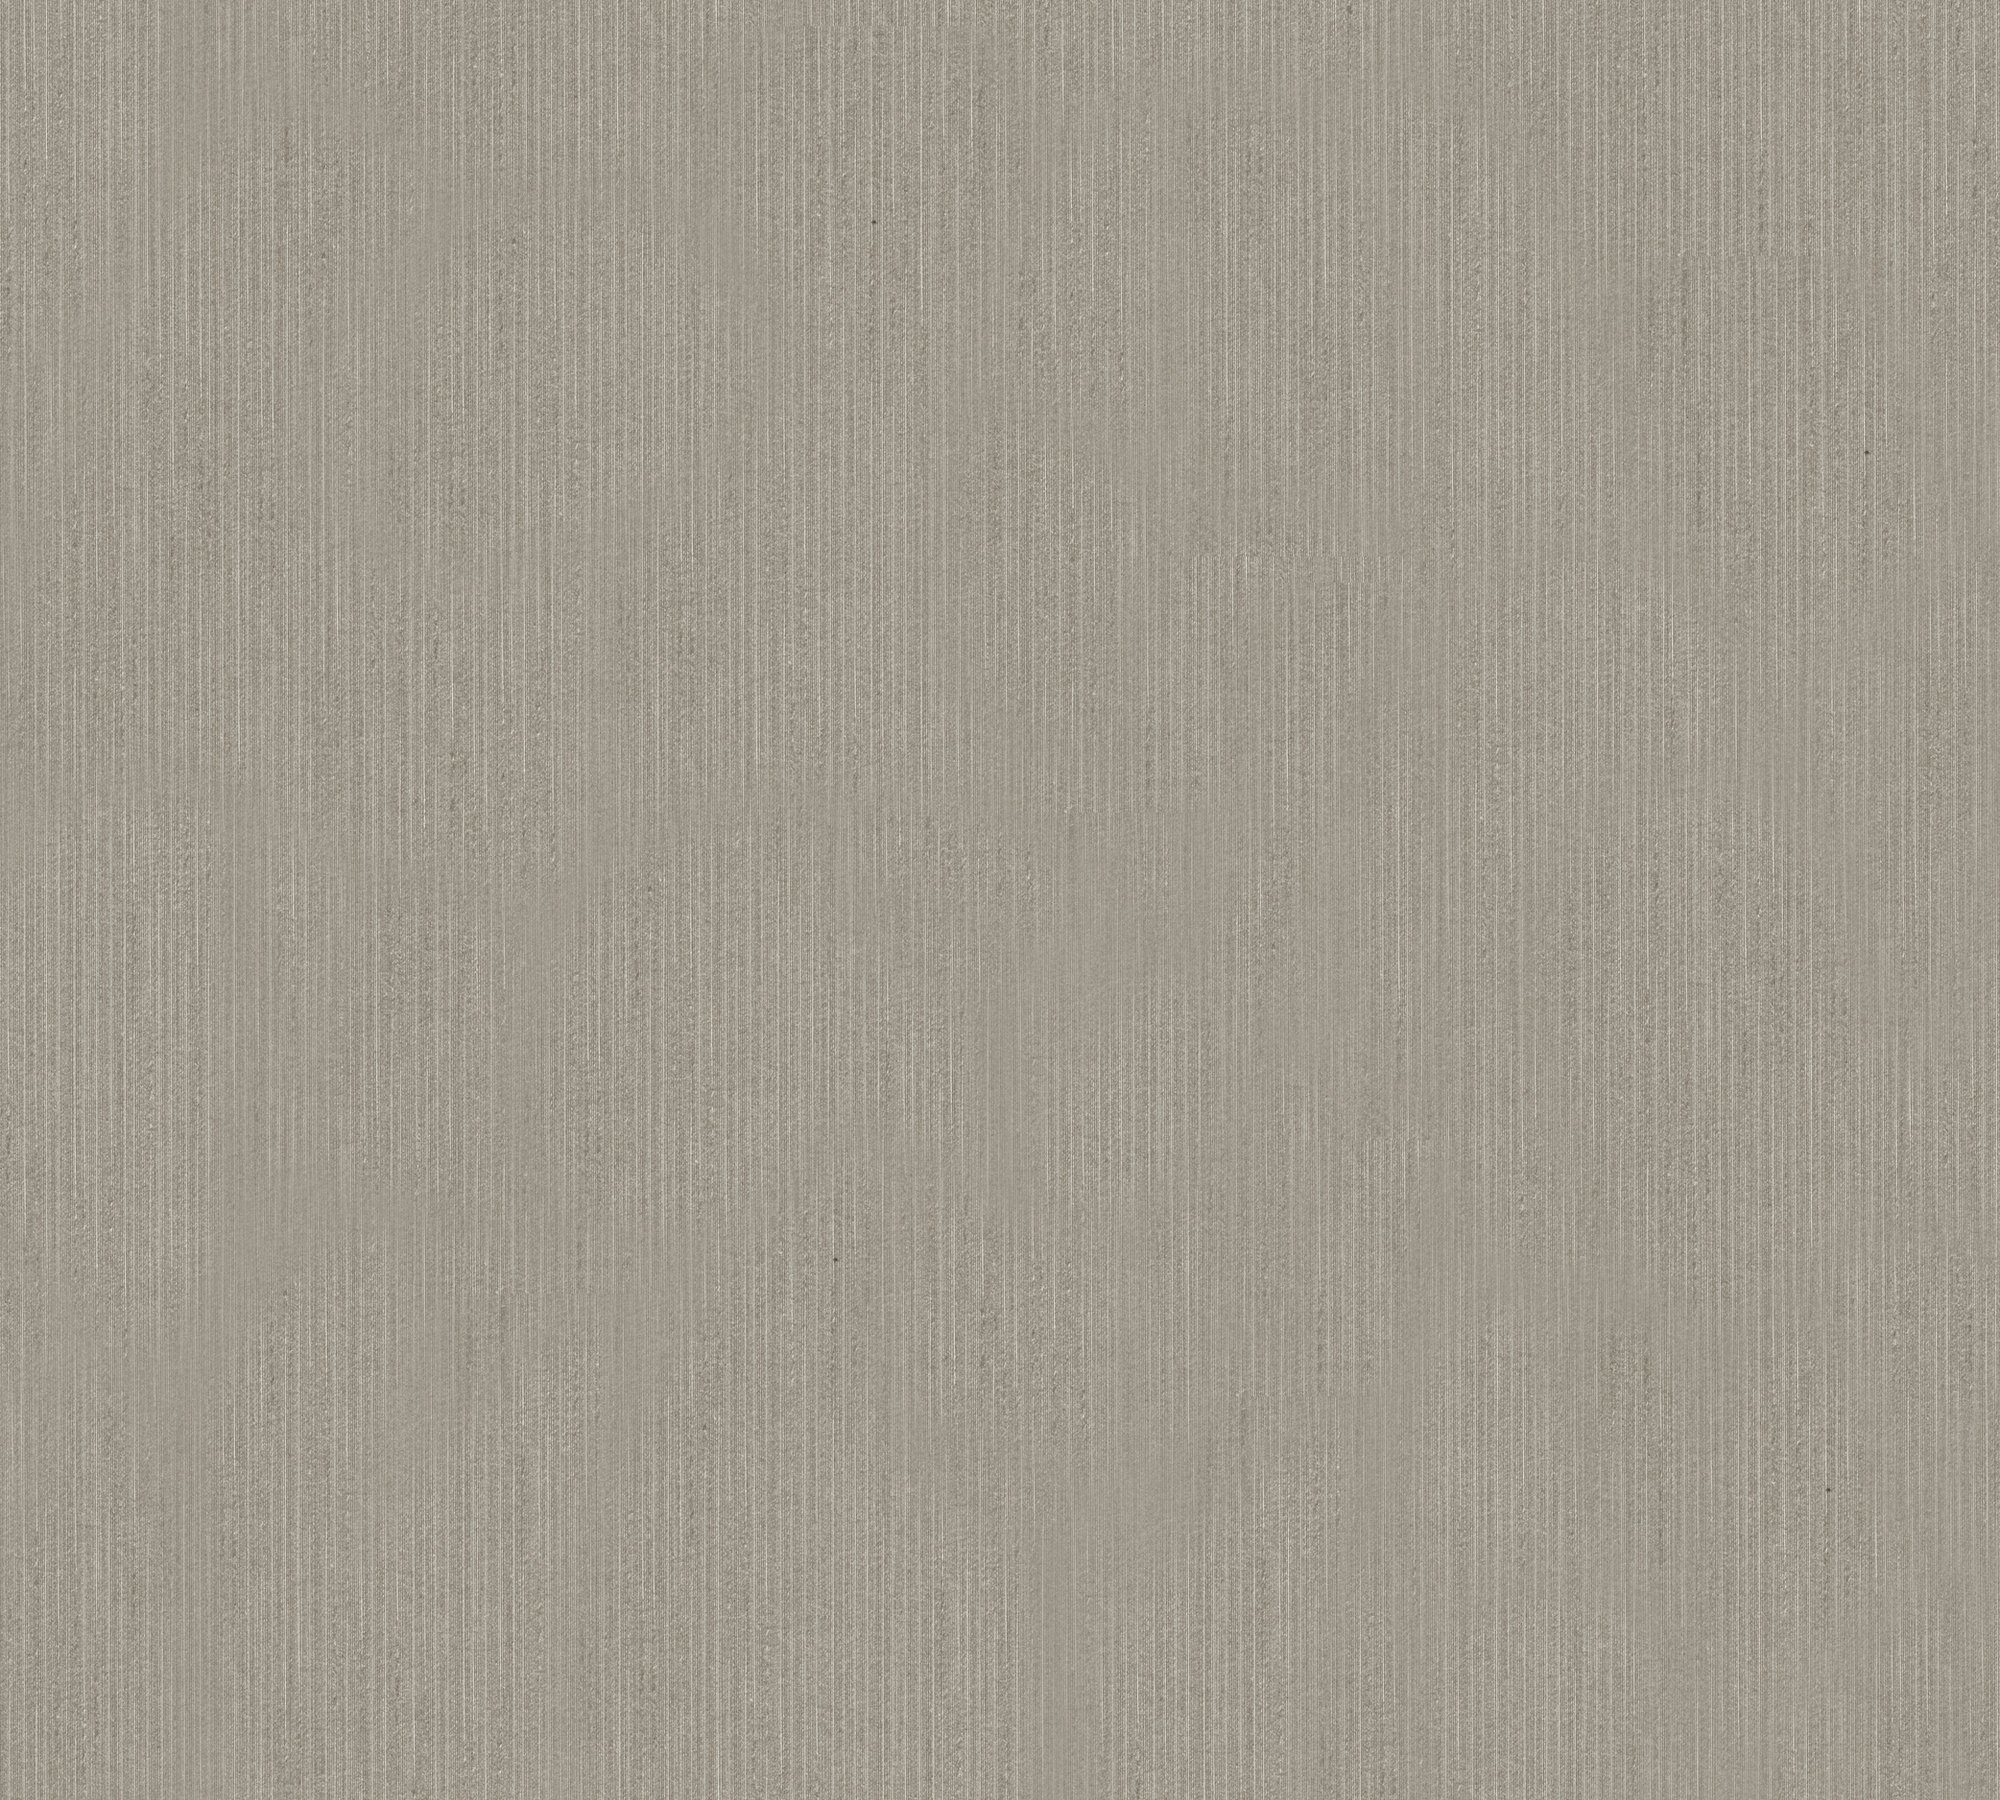 Textiltapete Paper Création A.S. Architects beige/grau Metallic Uni Silk, Textil samtig, Tapete einfarbig, matt,